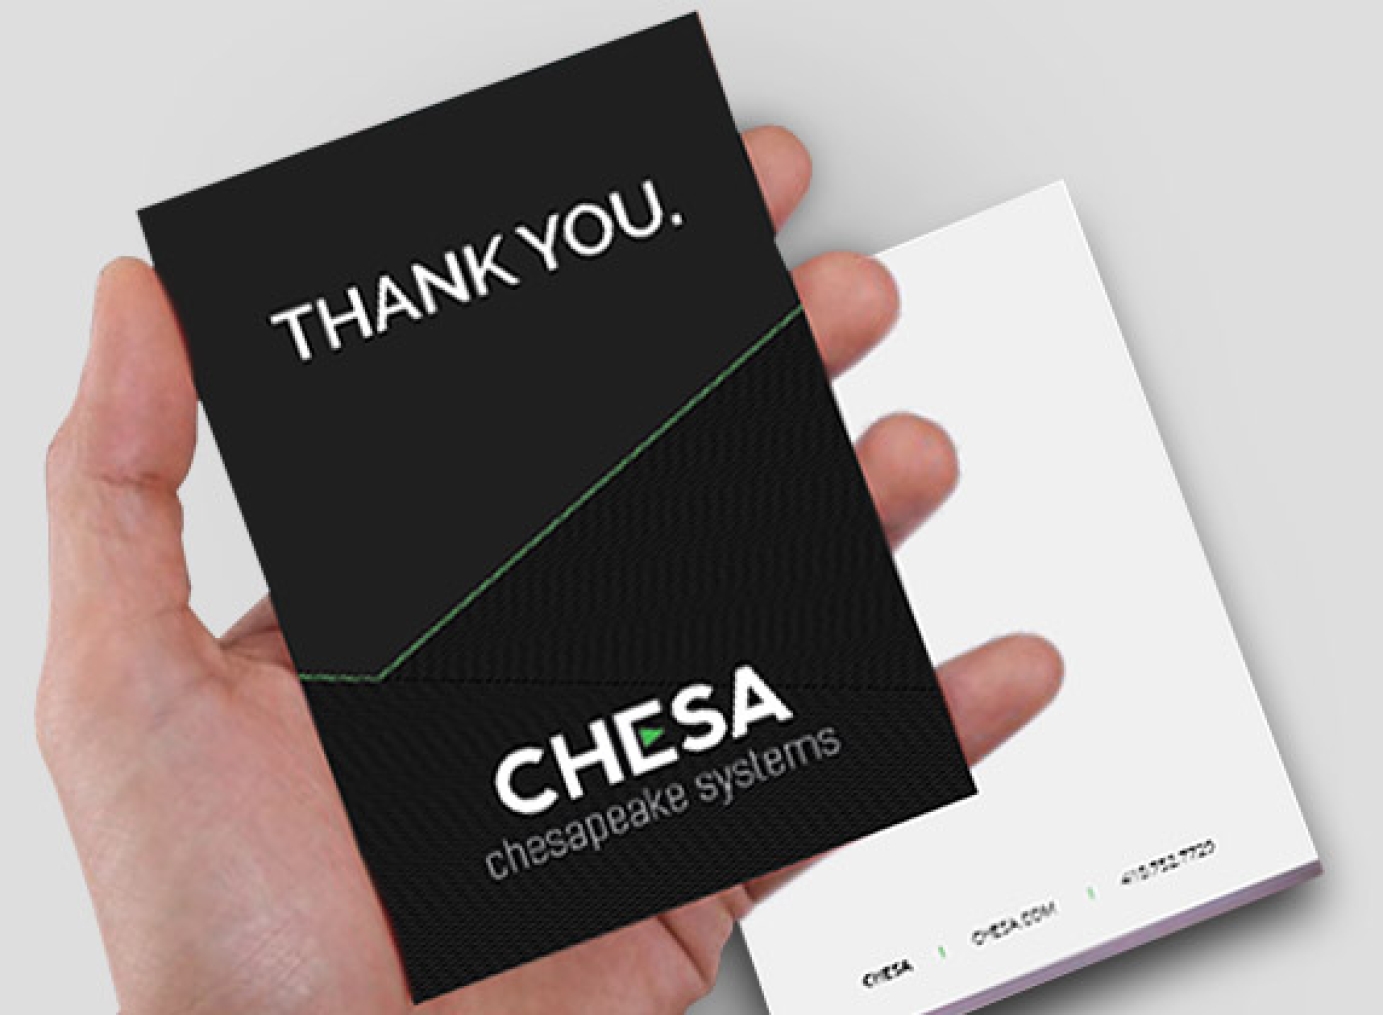 CHESA - Rebrand + various design